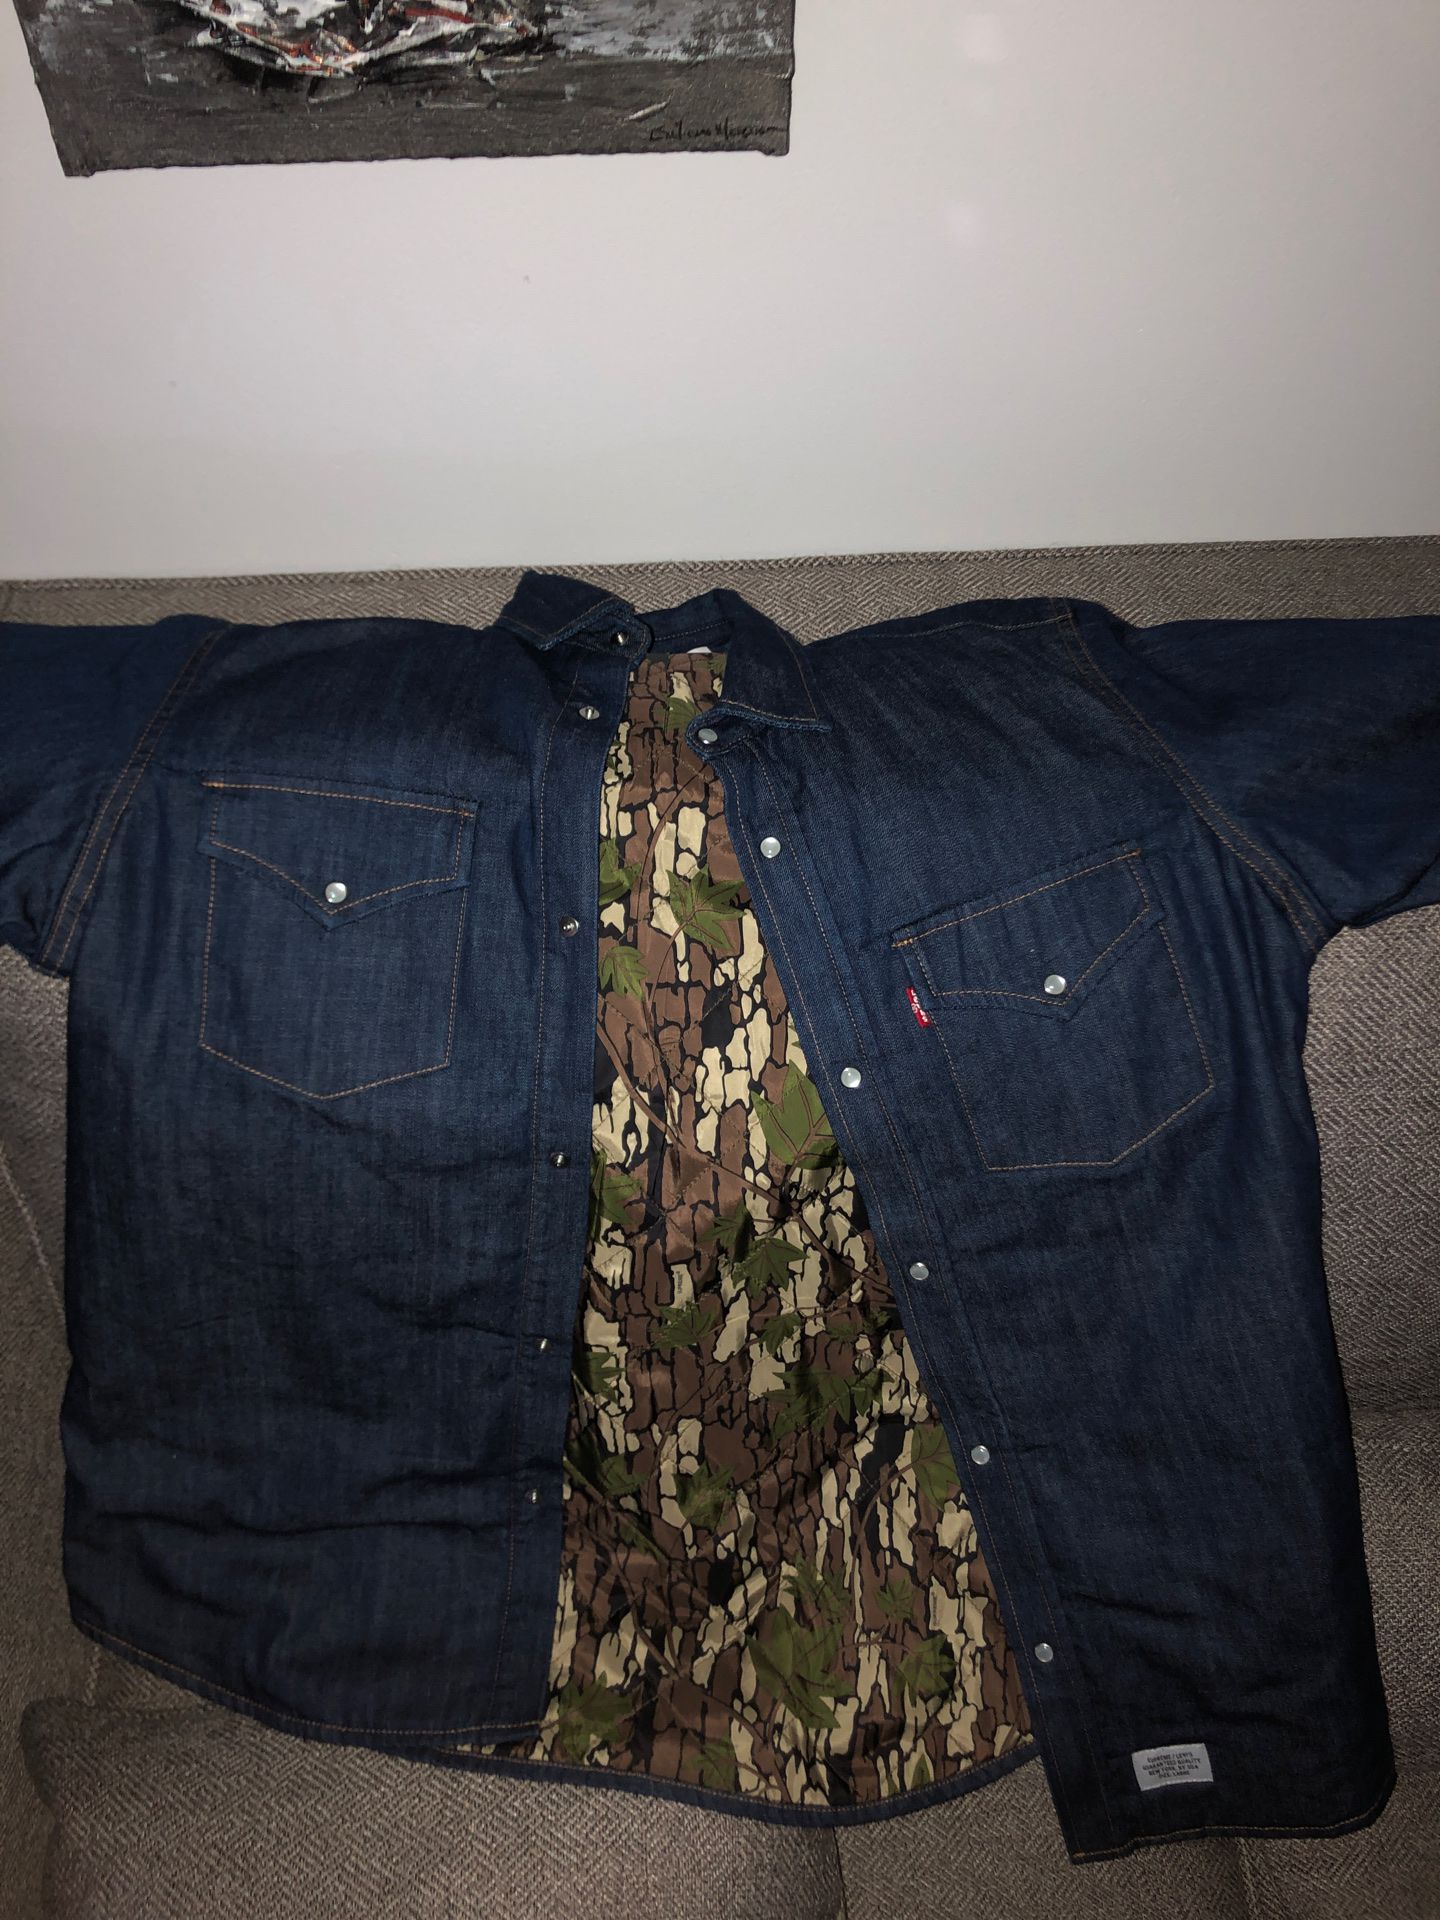 Supreme Levi’s jean jacket